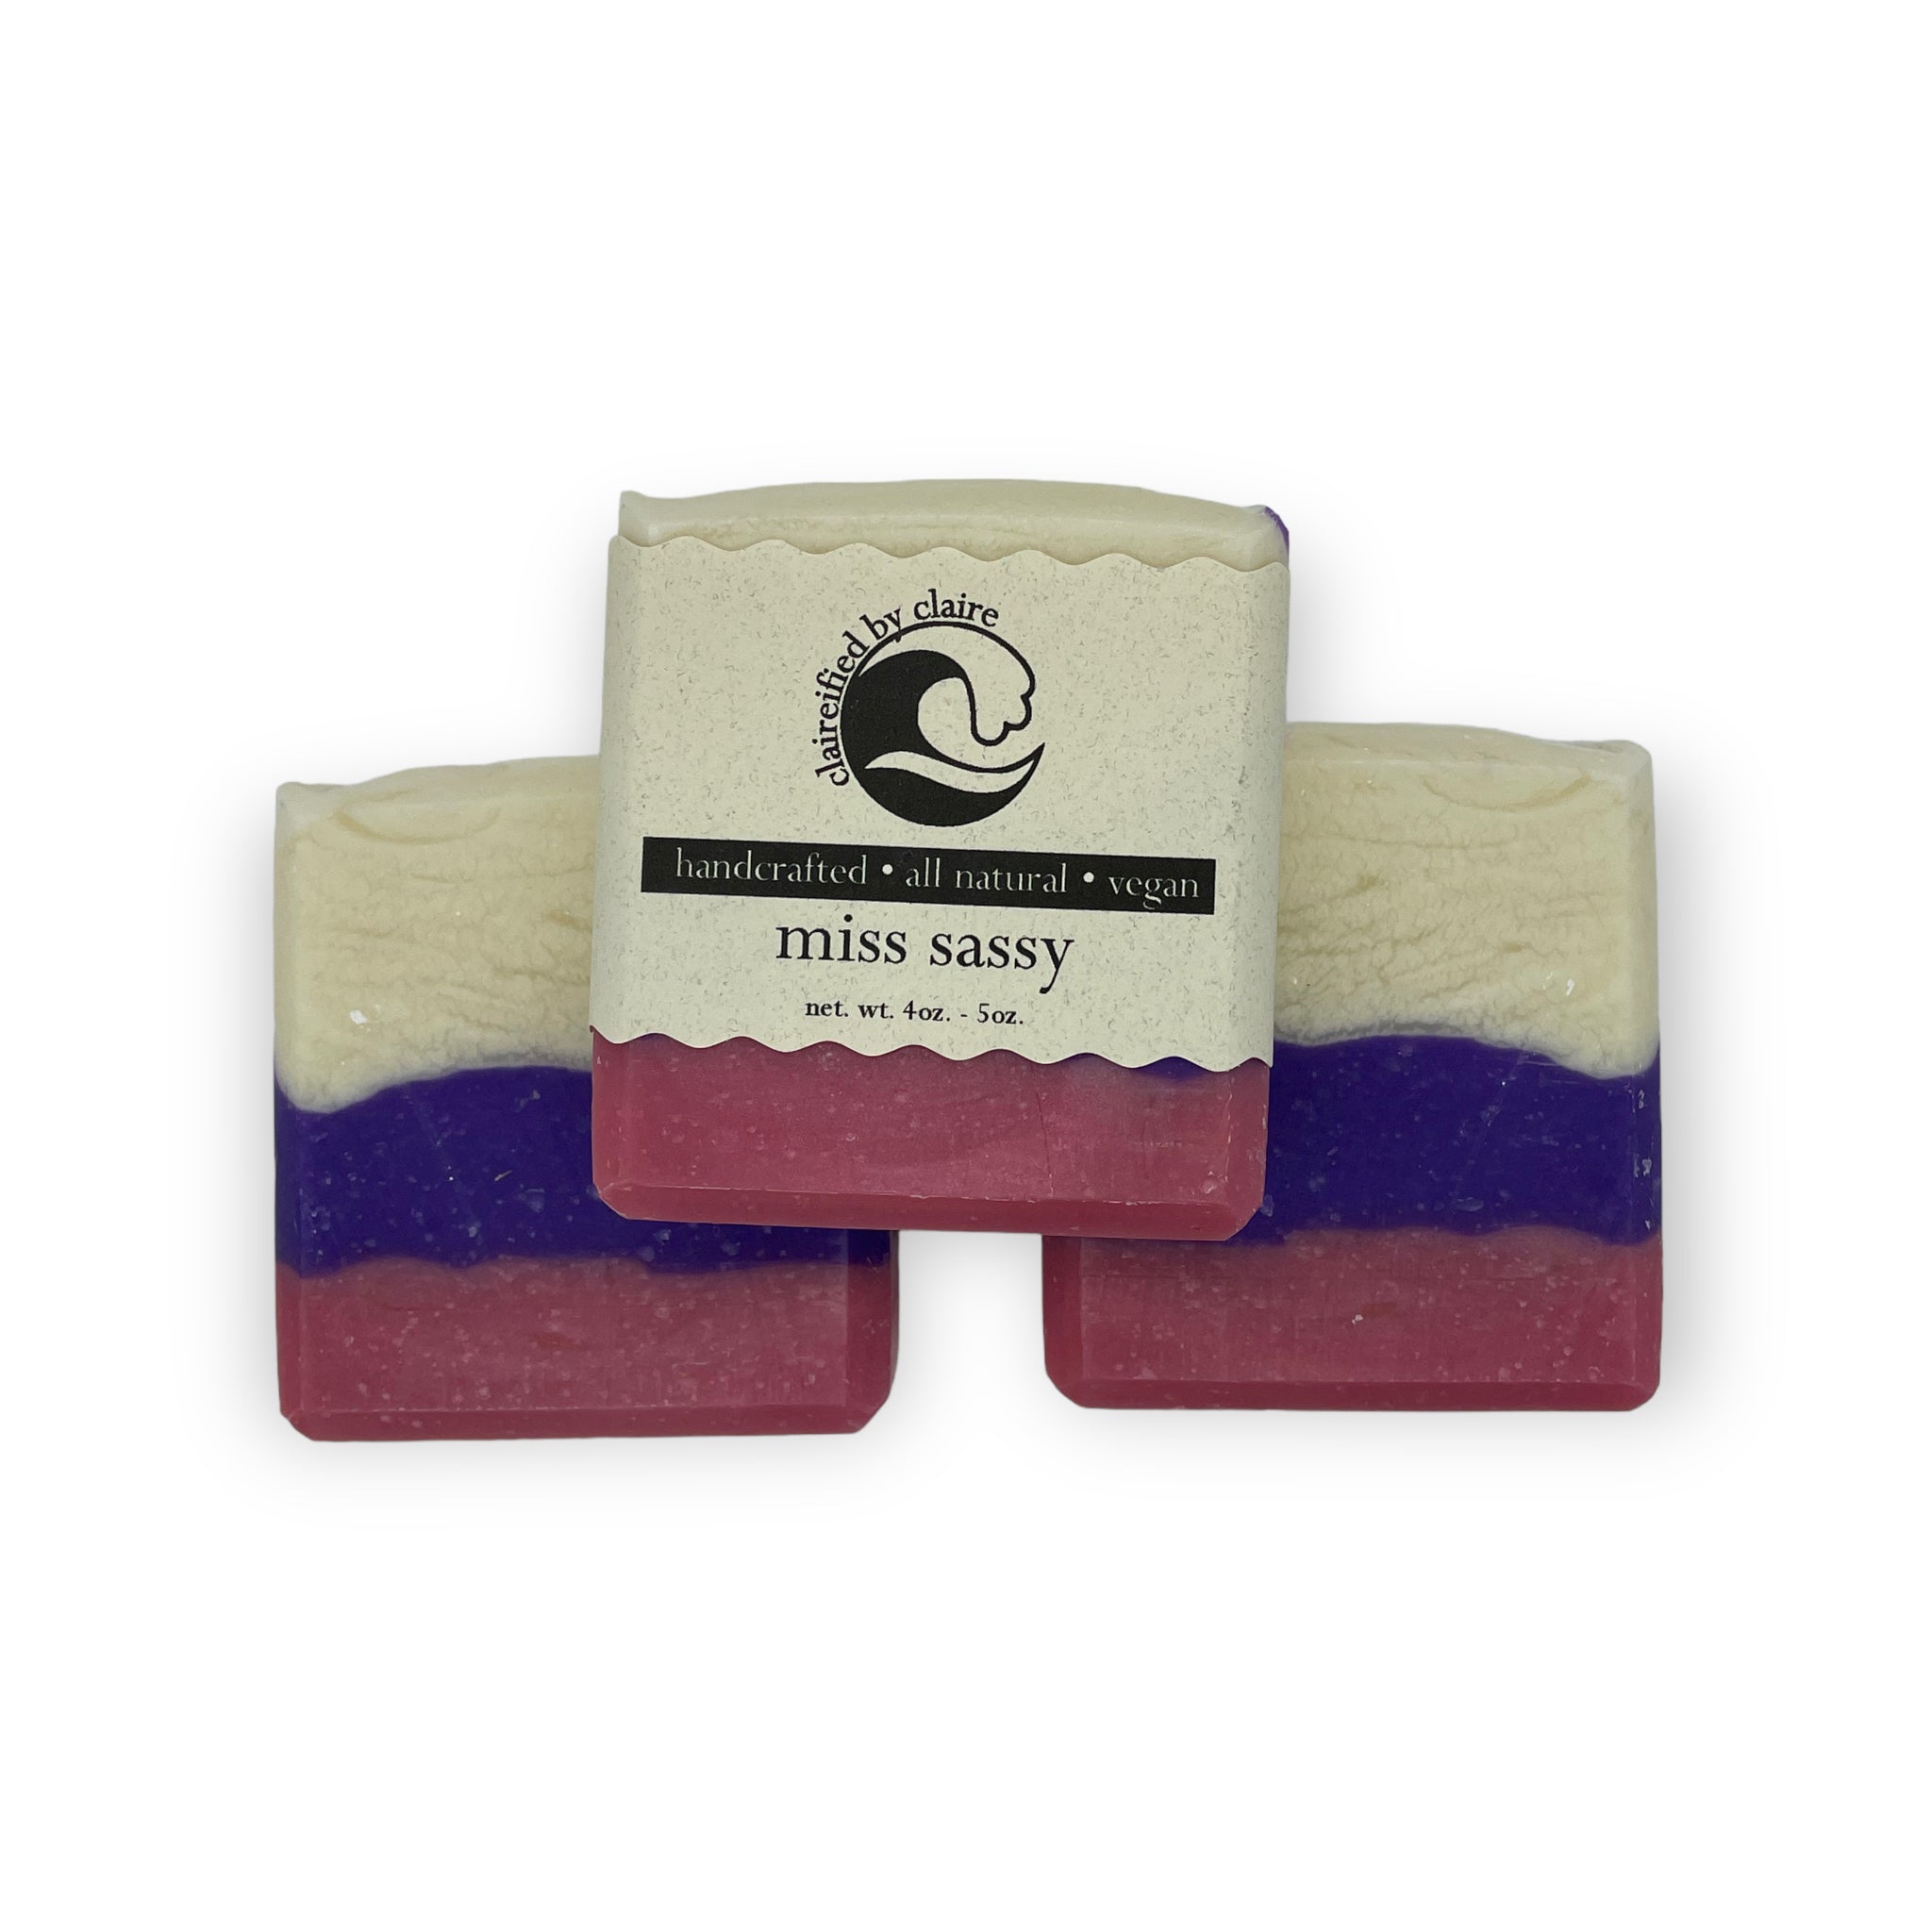 Miss Sassy handmade soap inspired by Daisy Duck from Disney's fab 5